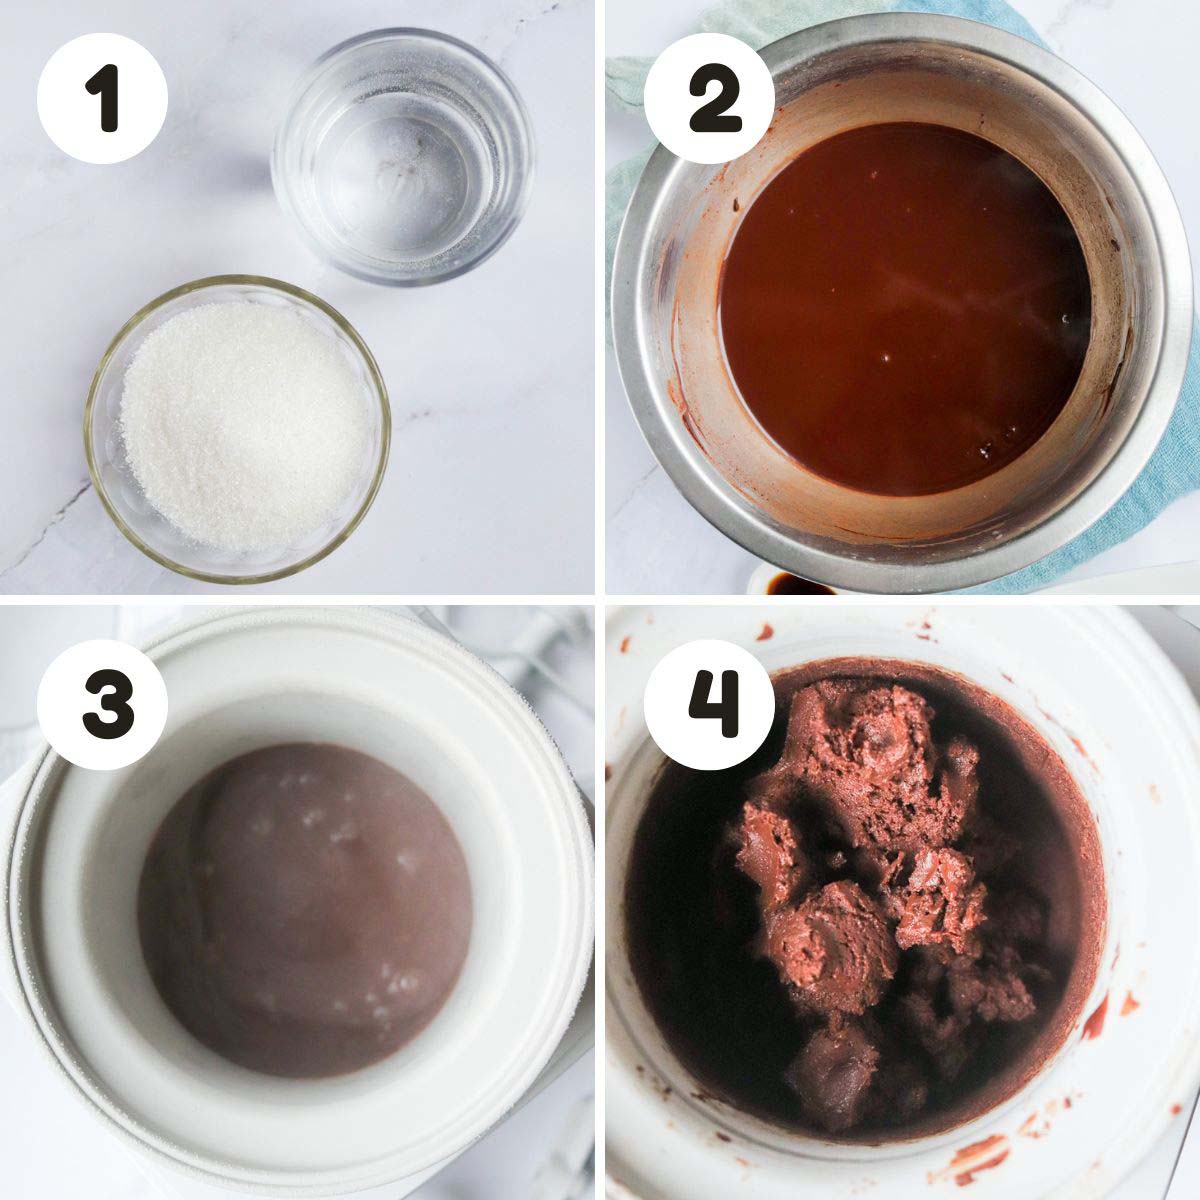 Steps to make the chocolate sorbet.